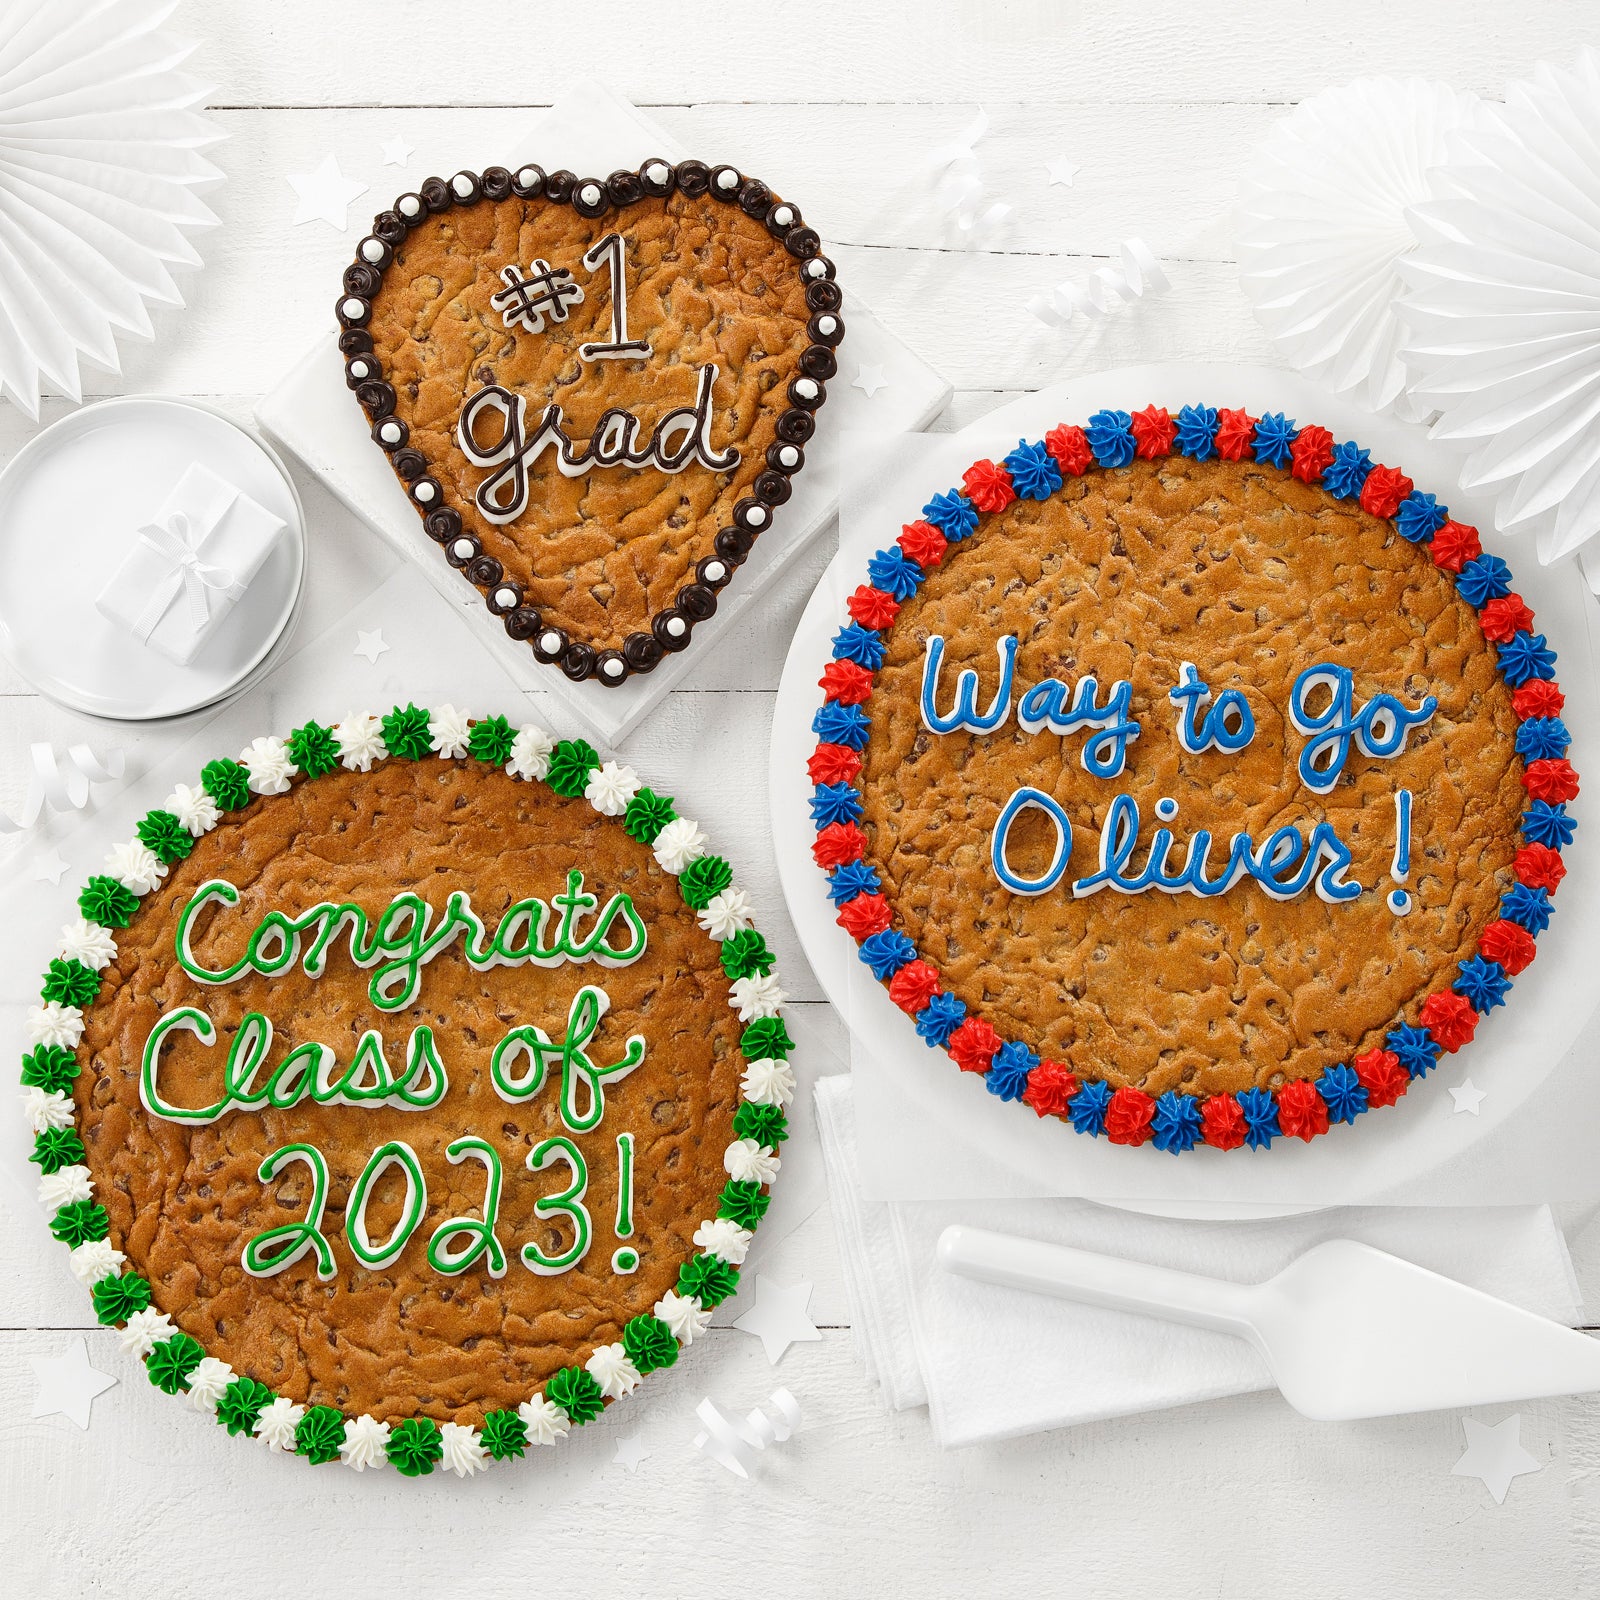 An assortment of custom cookies cakes